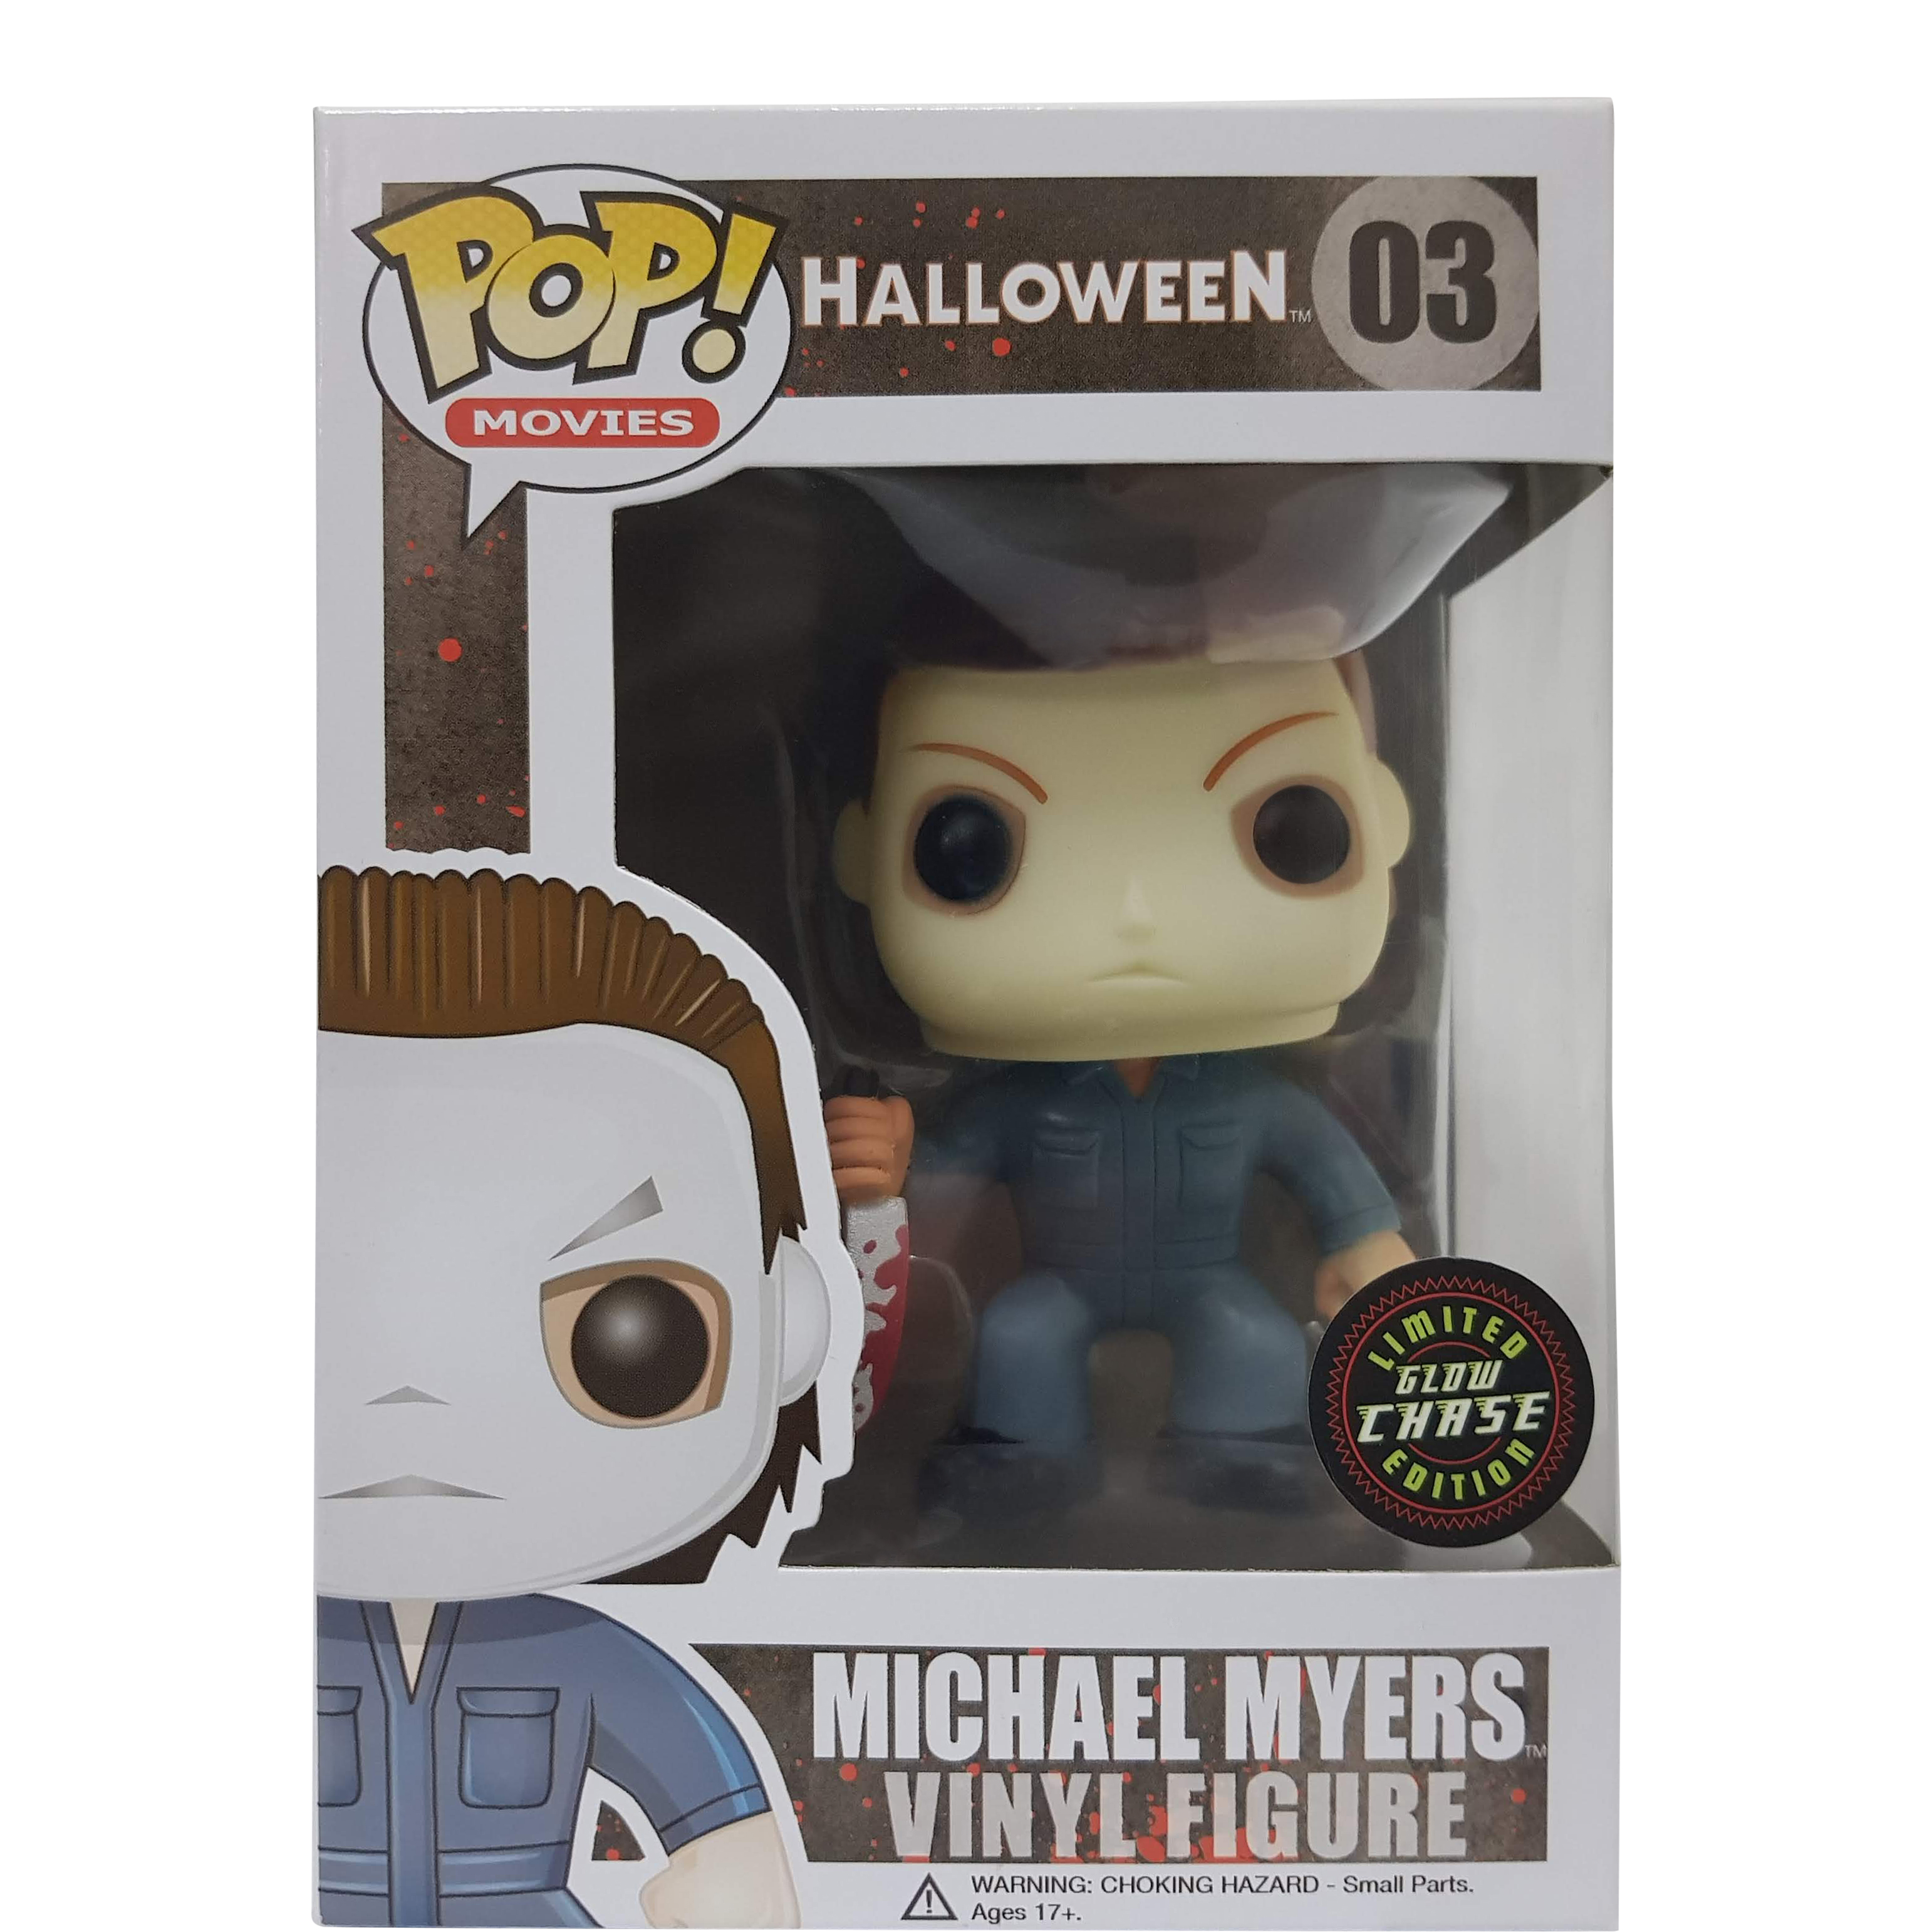 Michael Myers #03 Movies Pop Halloween